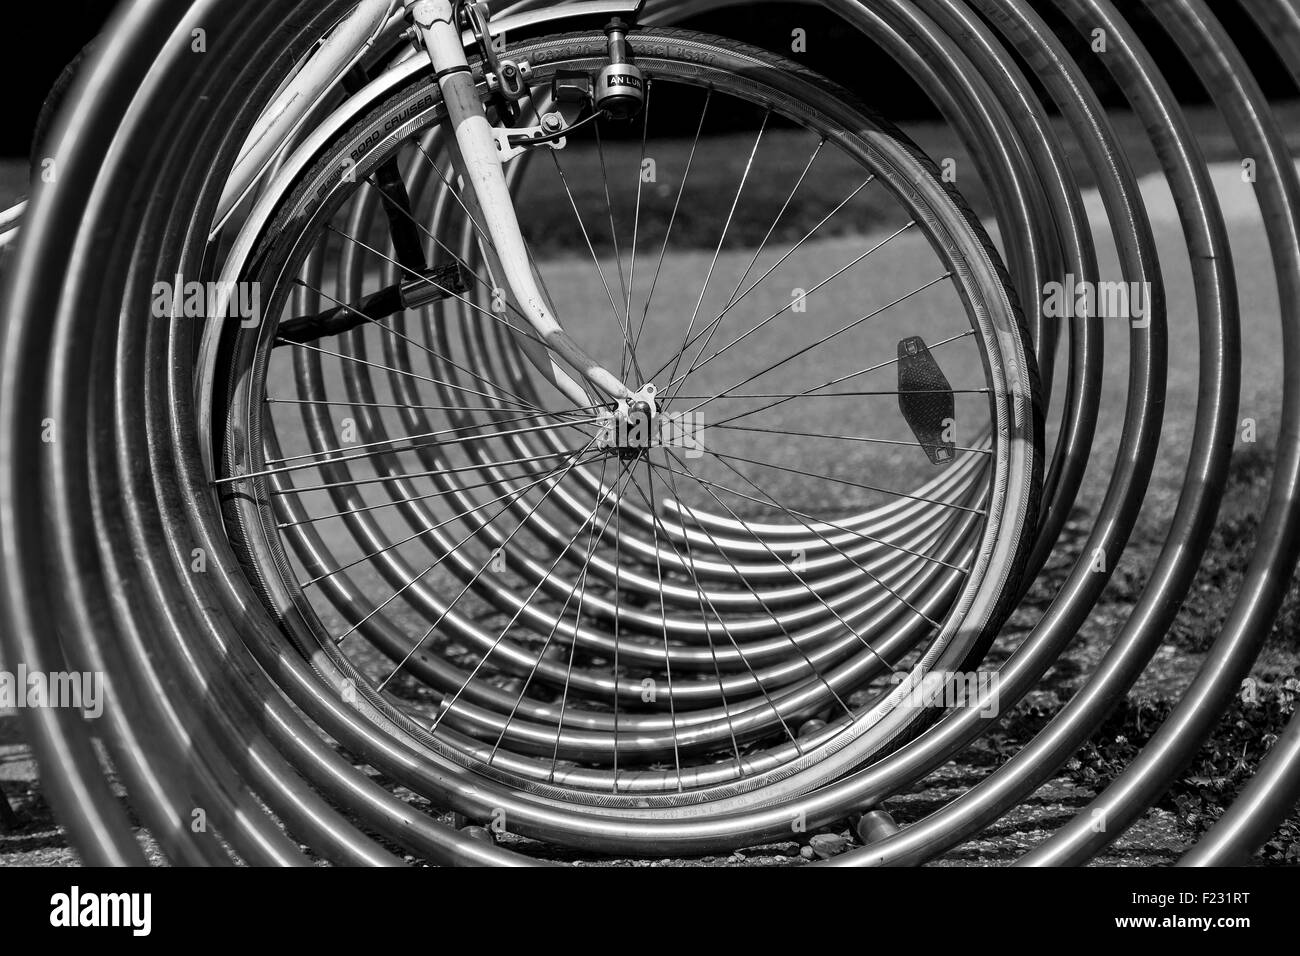 Bicycle Rack Perspective Stock Photo